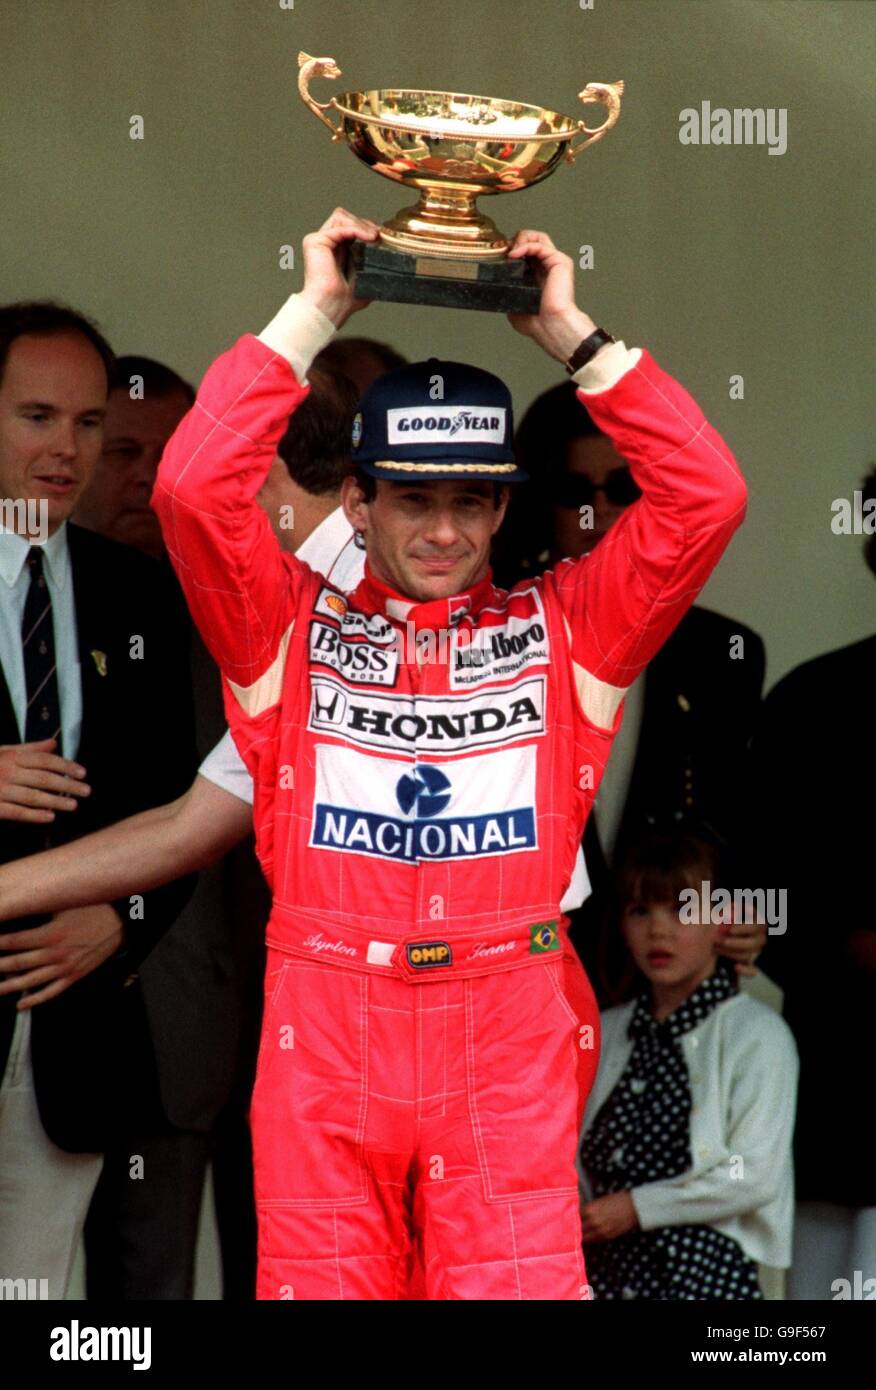 Tribute to Ayrton Senna on trophies at Emilia Romagna GP